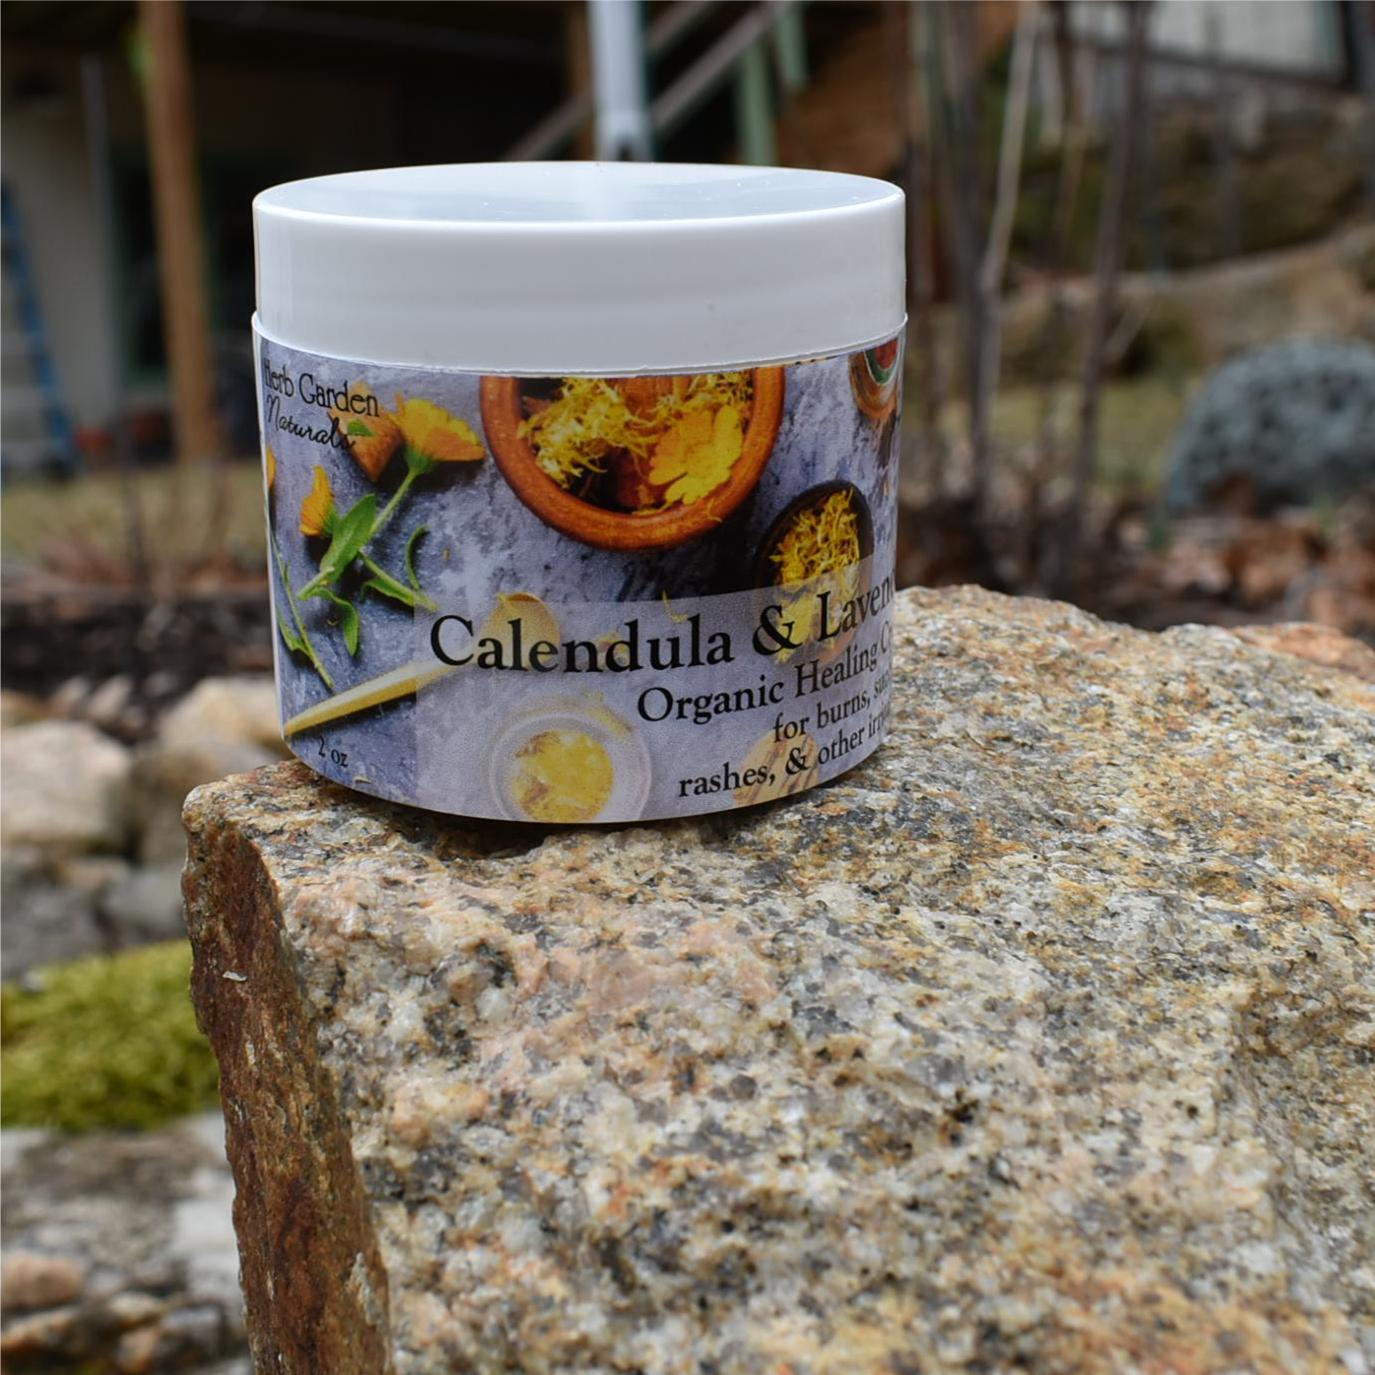 Calendula Lavender Healing Organic Cream